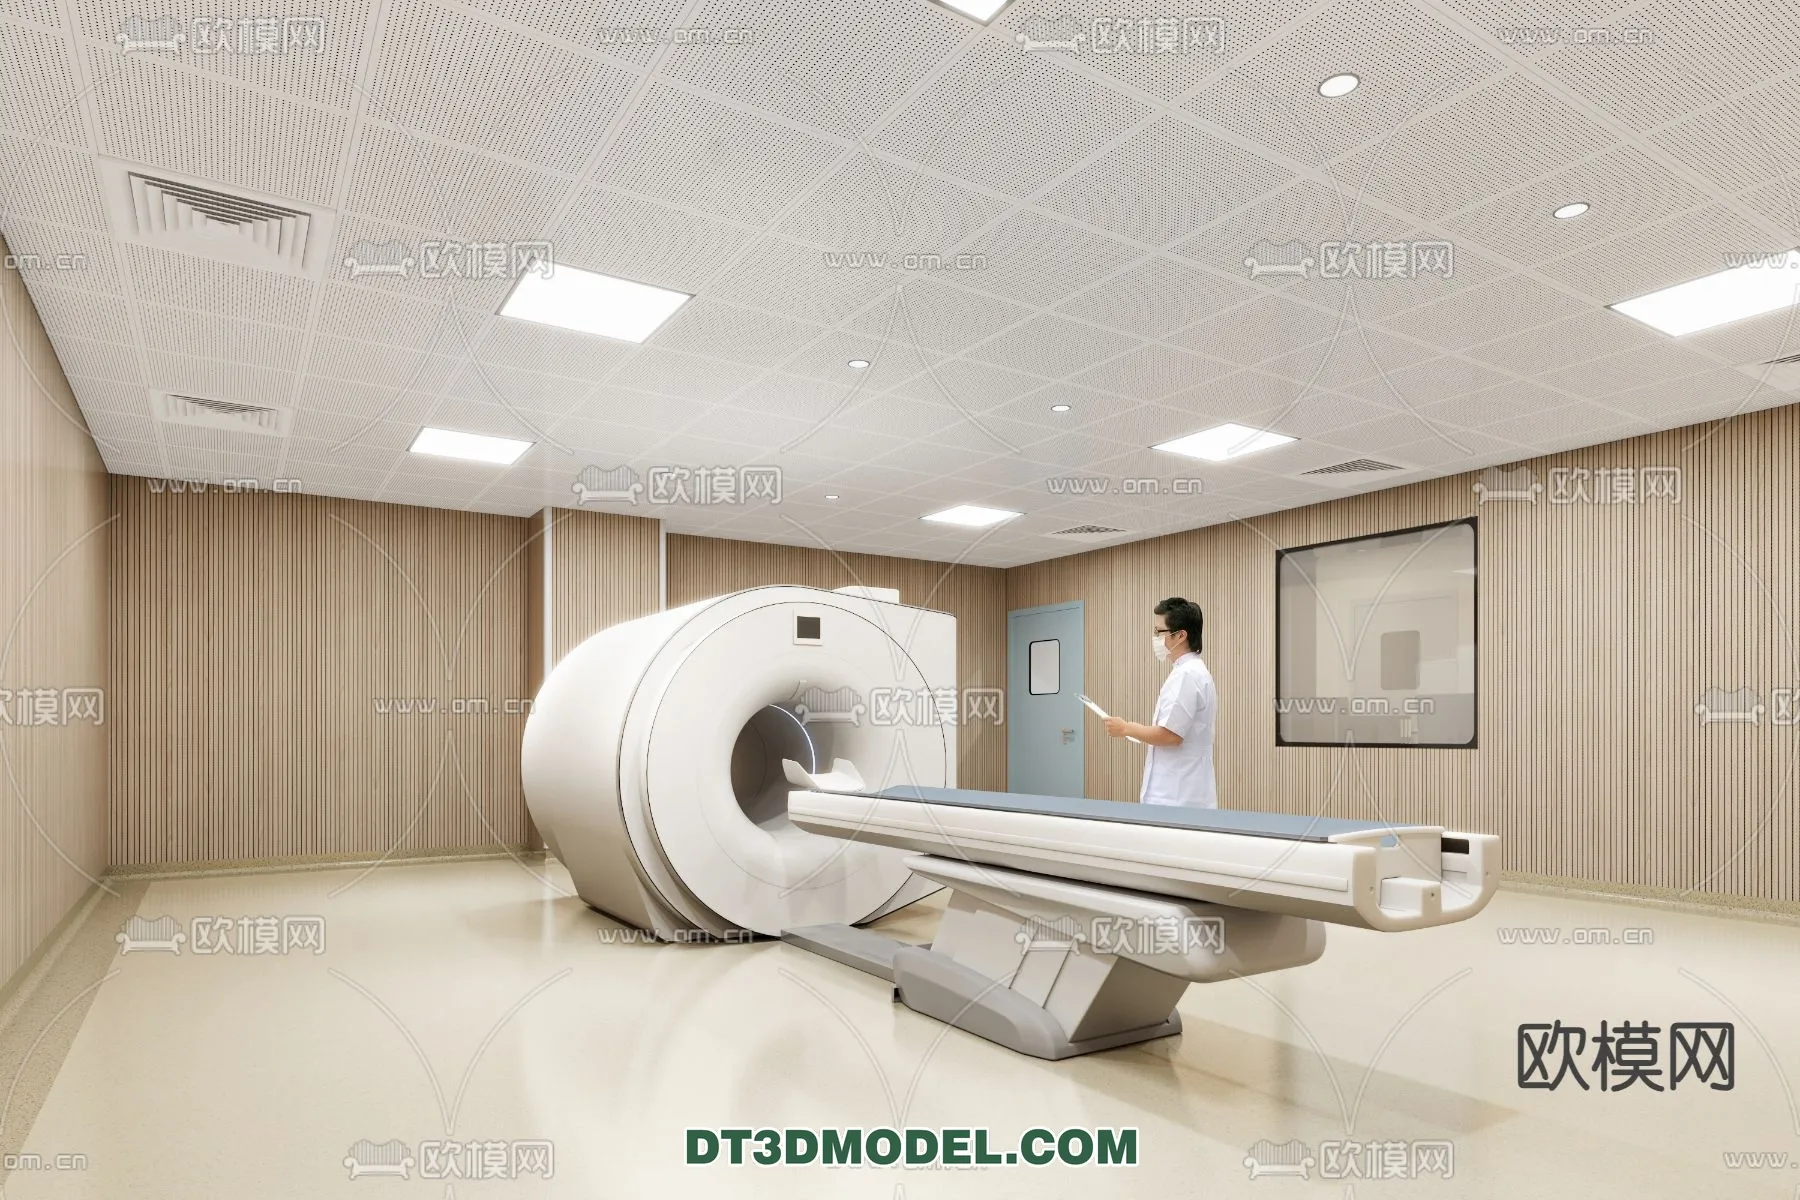 HOSPITAL 3D SCENES – MODERN – 0141